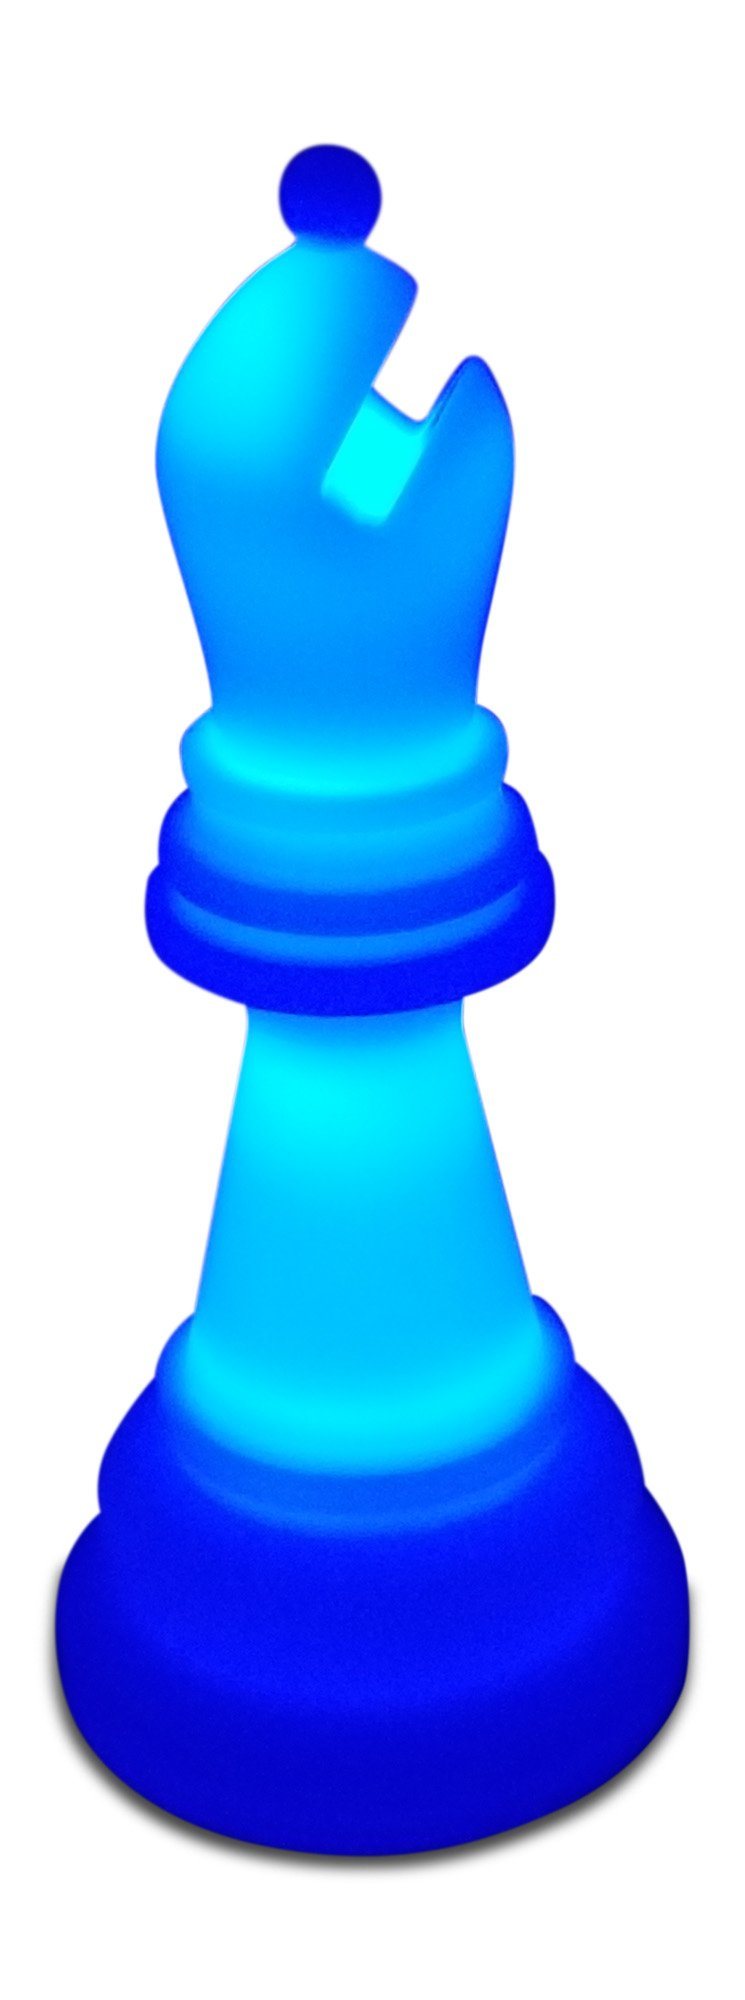 MegaChess 34 Inch Perfect Bishop Light-Up Giant Chess Piece - Blue |  | MegaChess.com